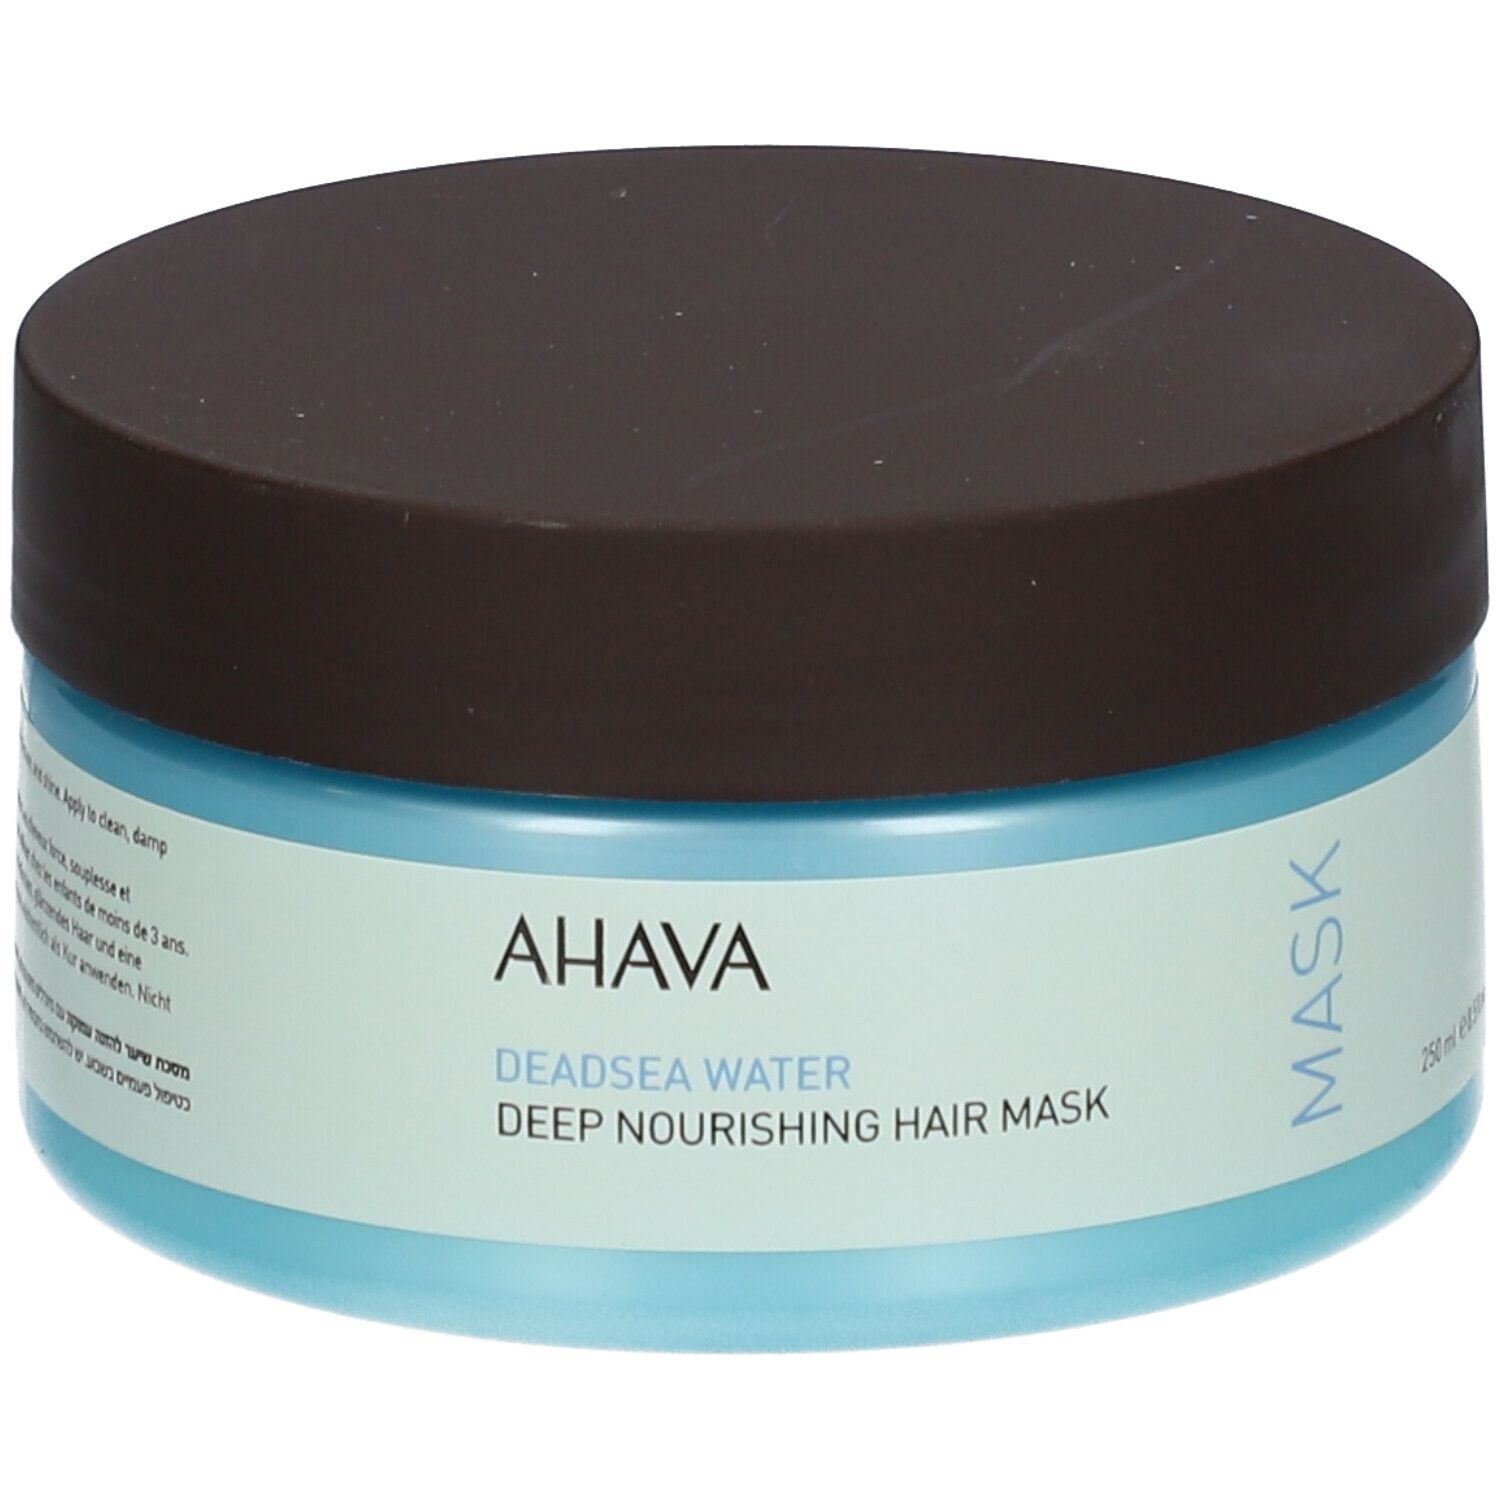 Image of AHAVA Deep Nourishing Hair Mask